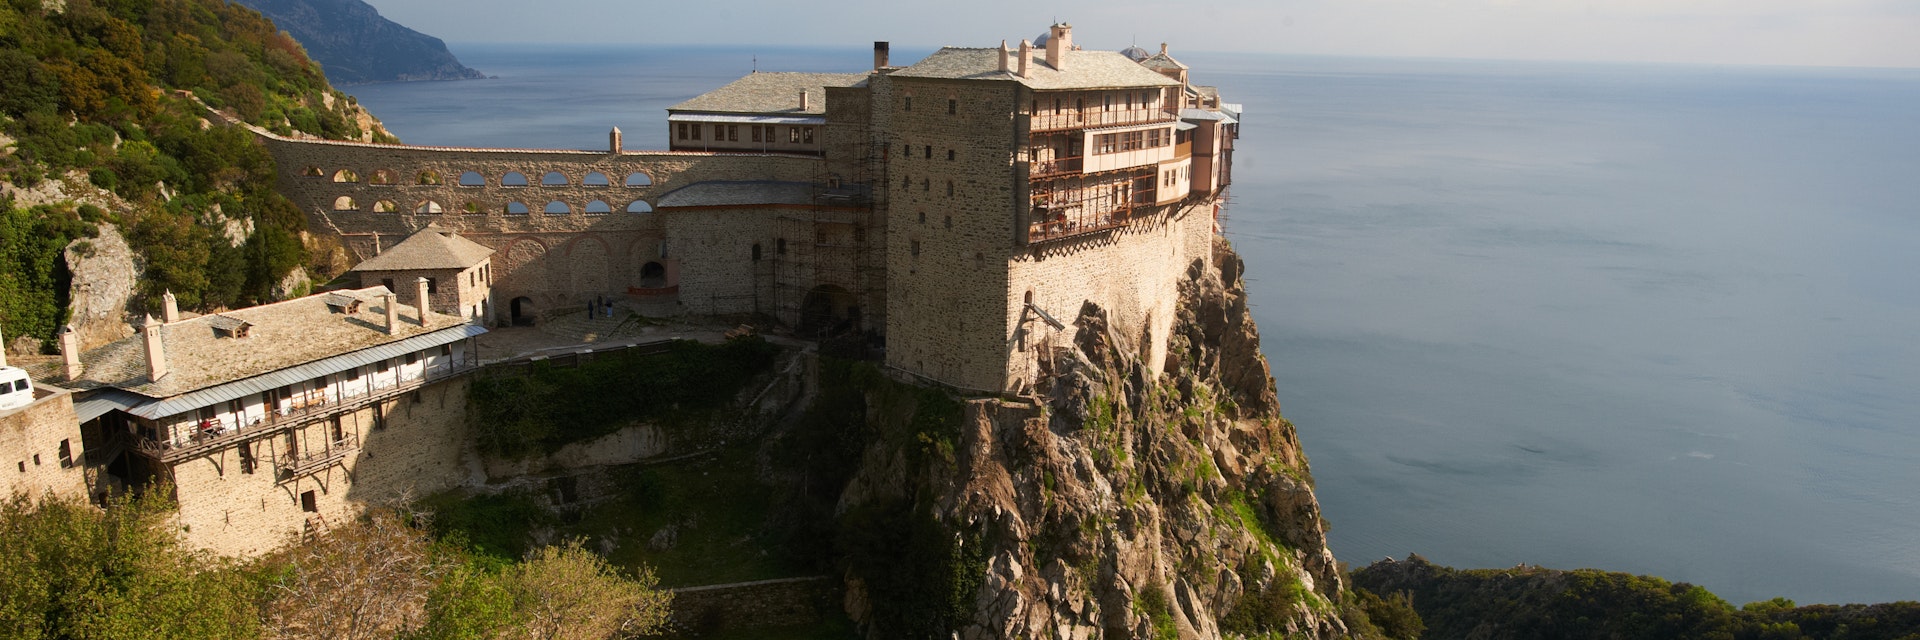 Simonos Petras Monastery, Mount Athos, Greece.